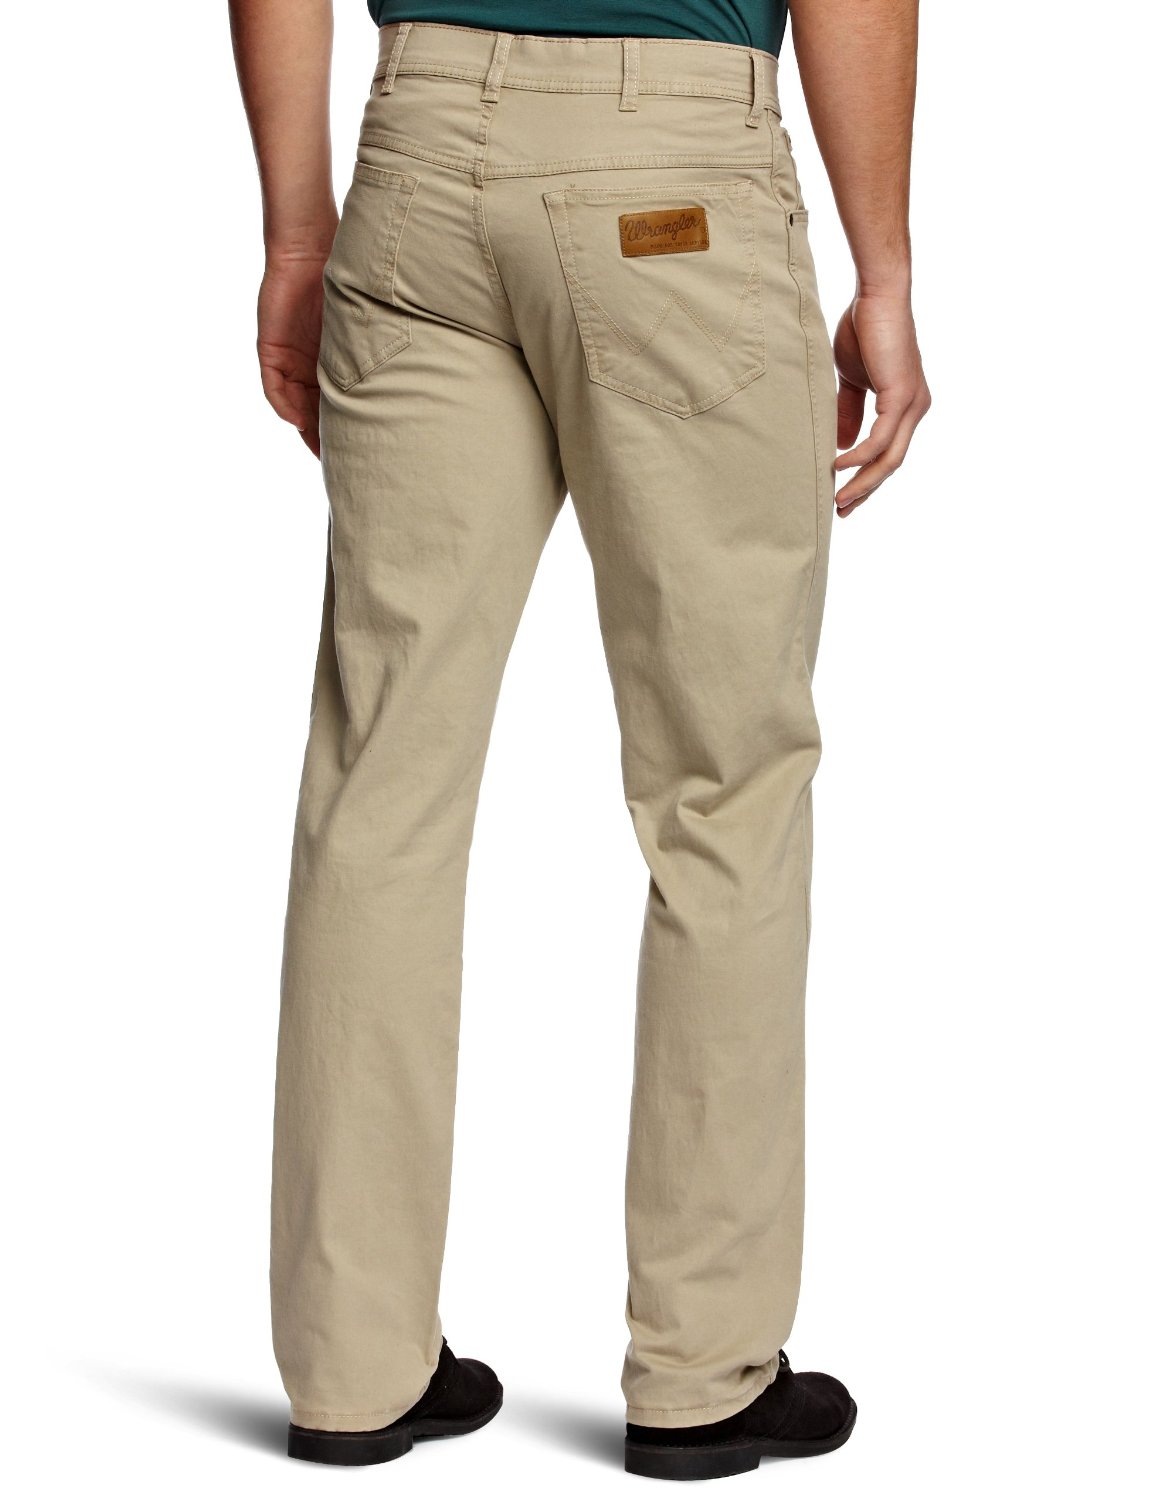 New Wrangler Men's Texas Stretch Jeans Soft Fabric Lightweight Camel Sand Beige | eBay